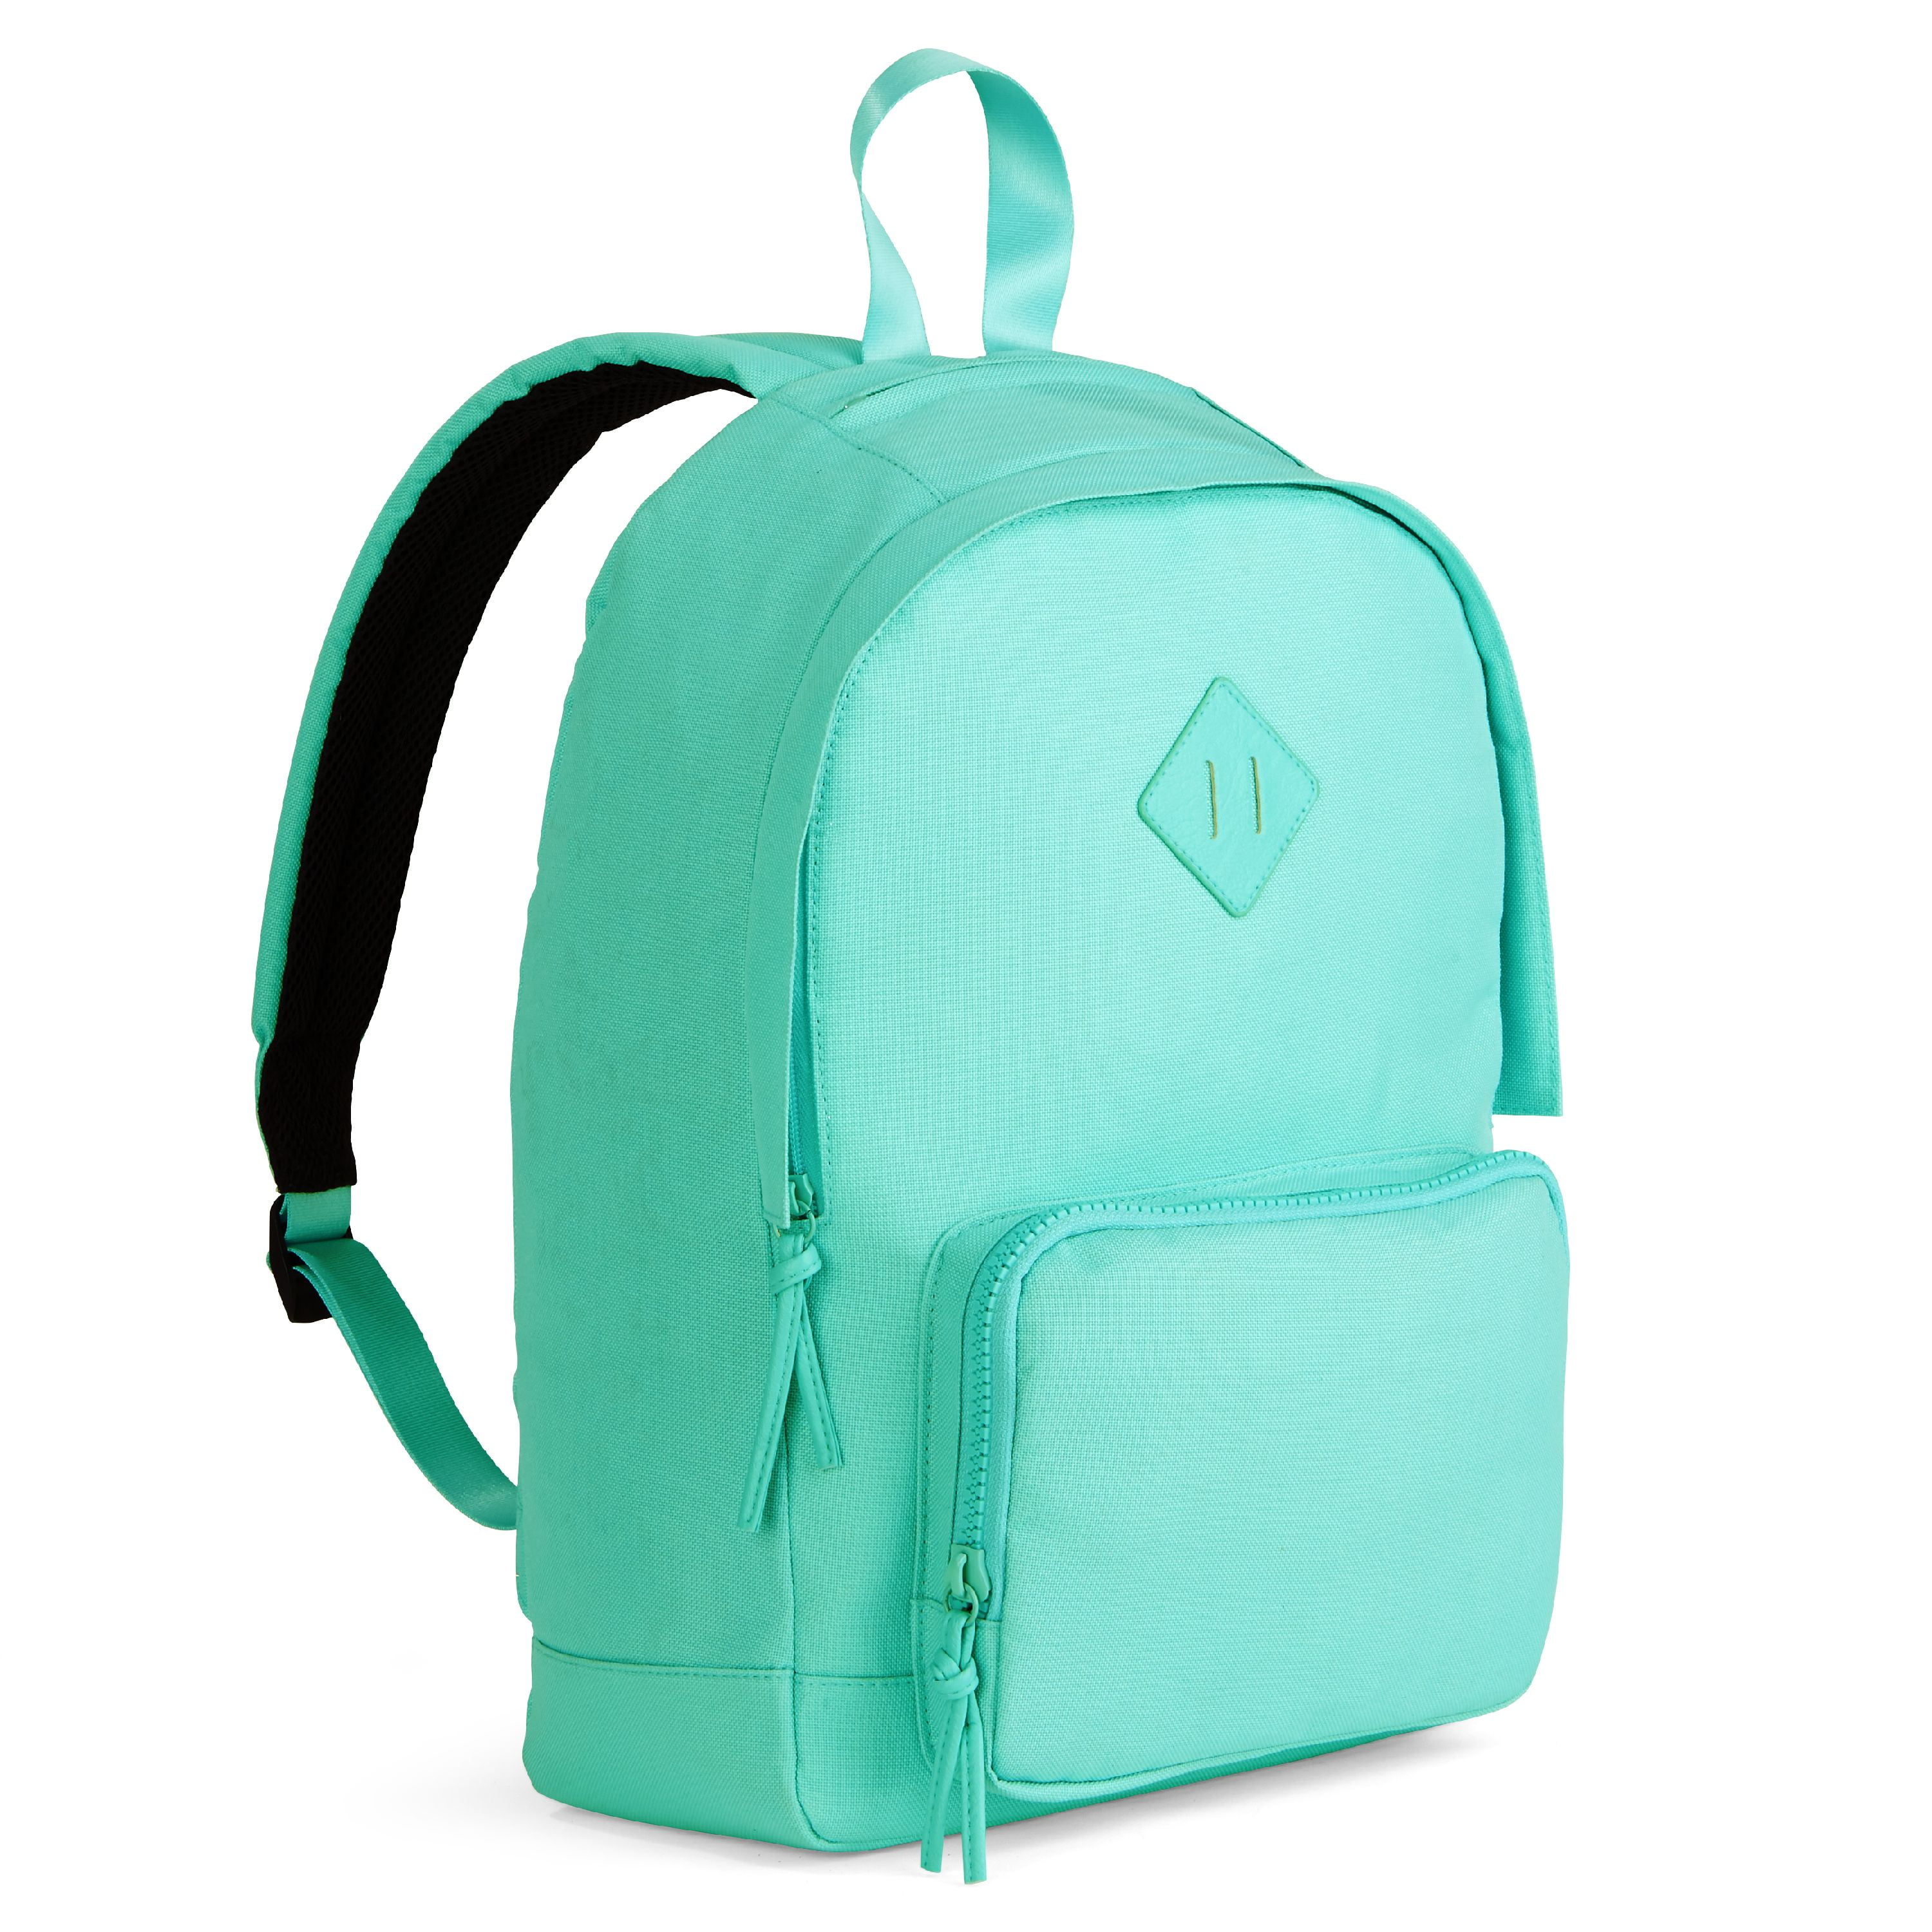 Mint Dome Backpack - Walmart.com